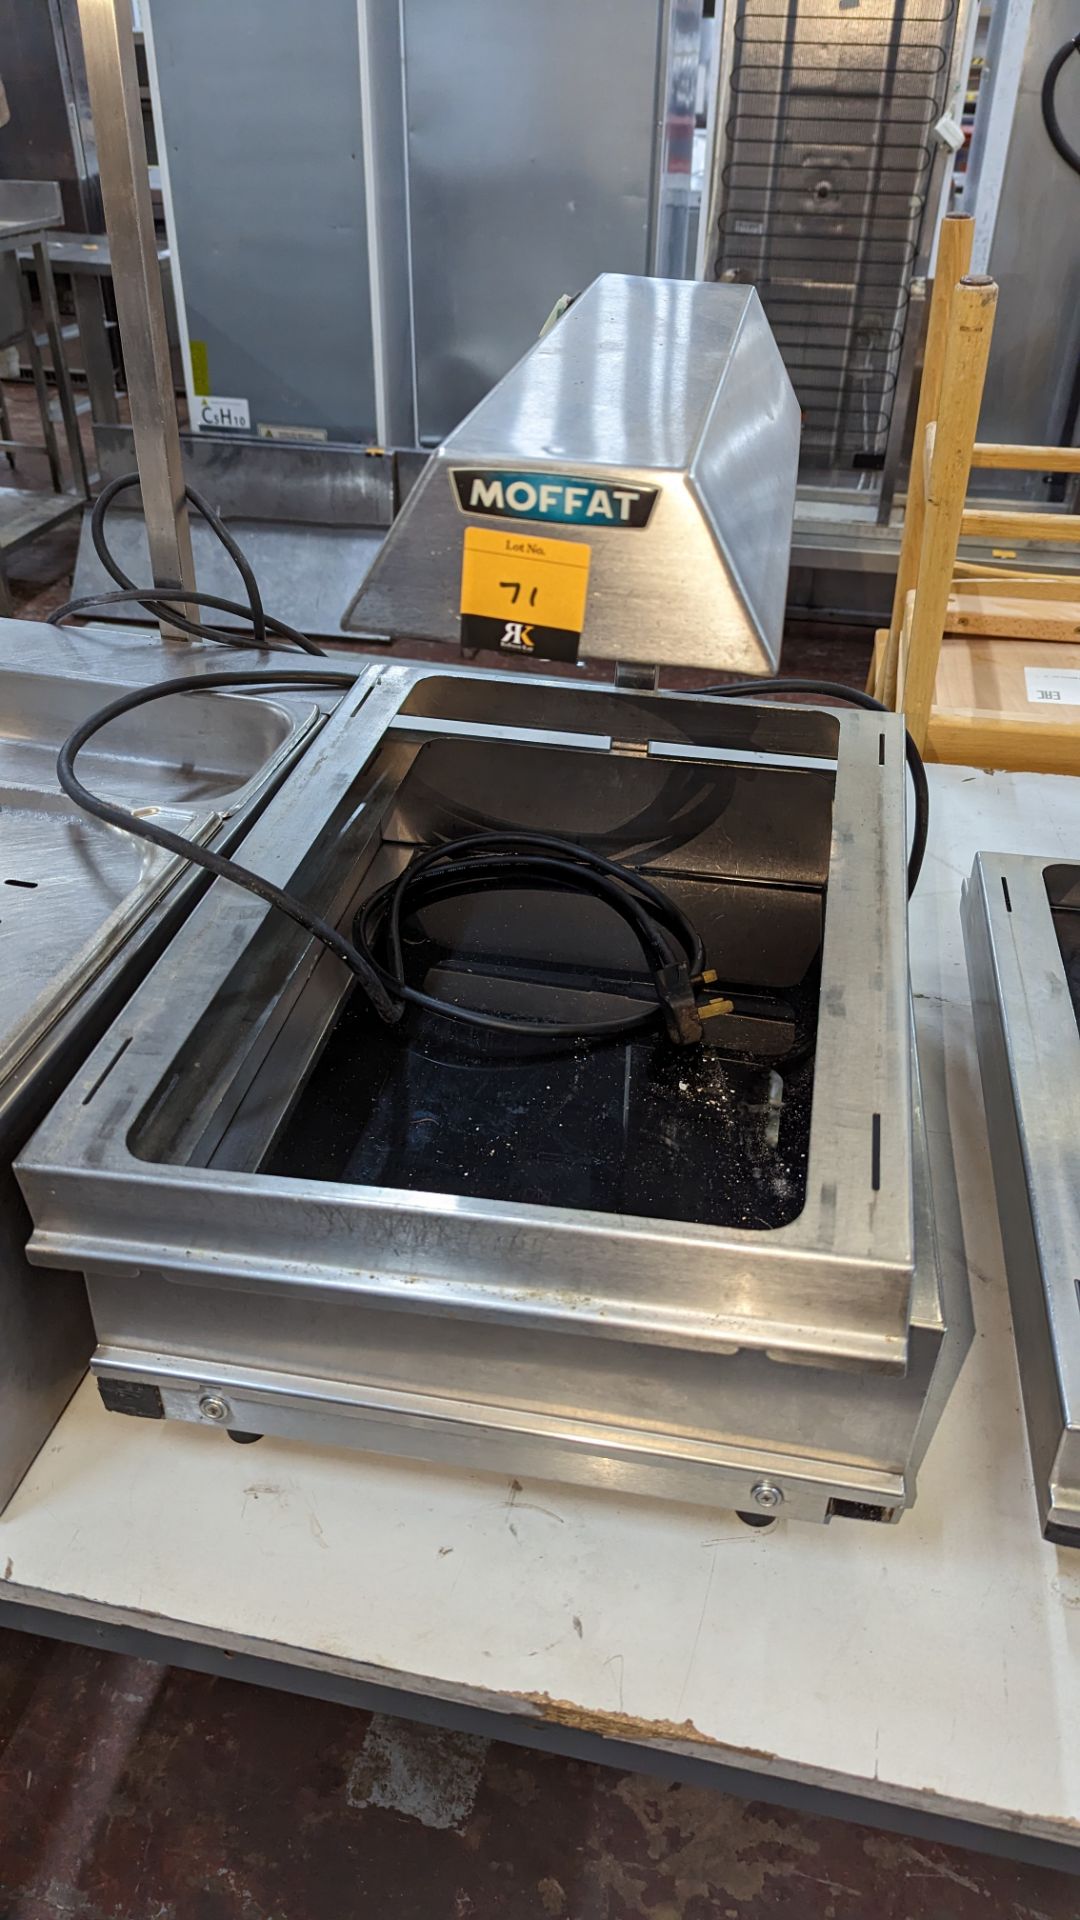 Moffat benchtop warming unit